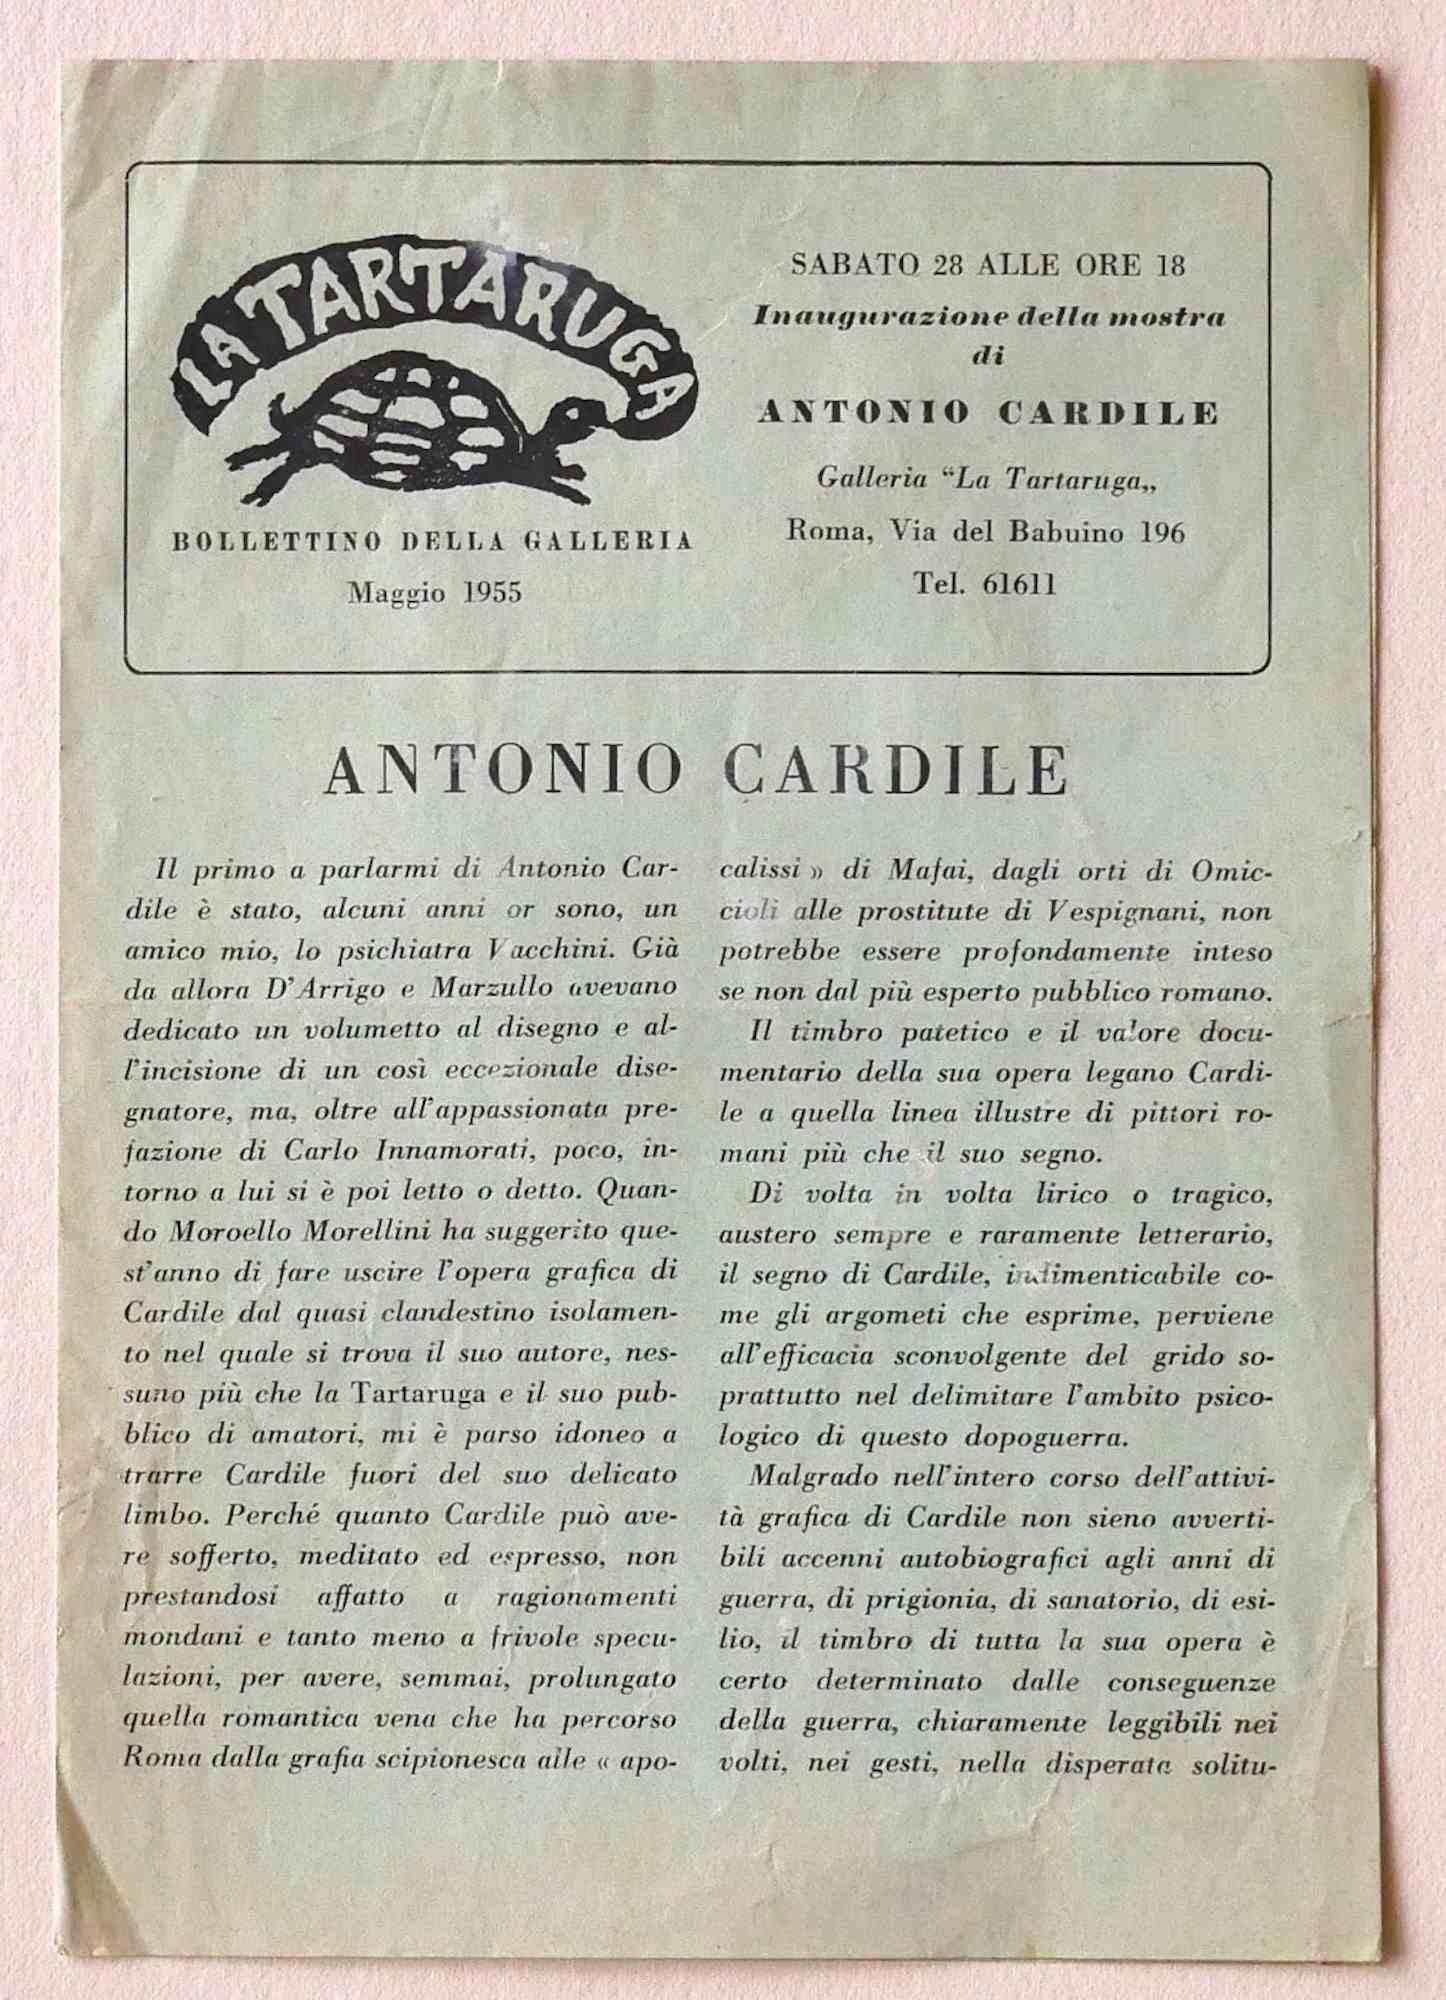 La Tartaruga Gallery Catalogue - Vintage Catalog after A. Cardile- 1955 - Art by Antonio Cardile